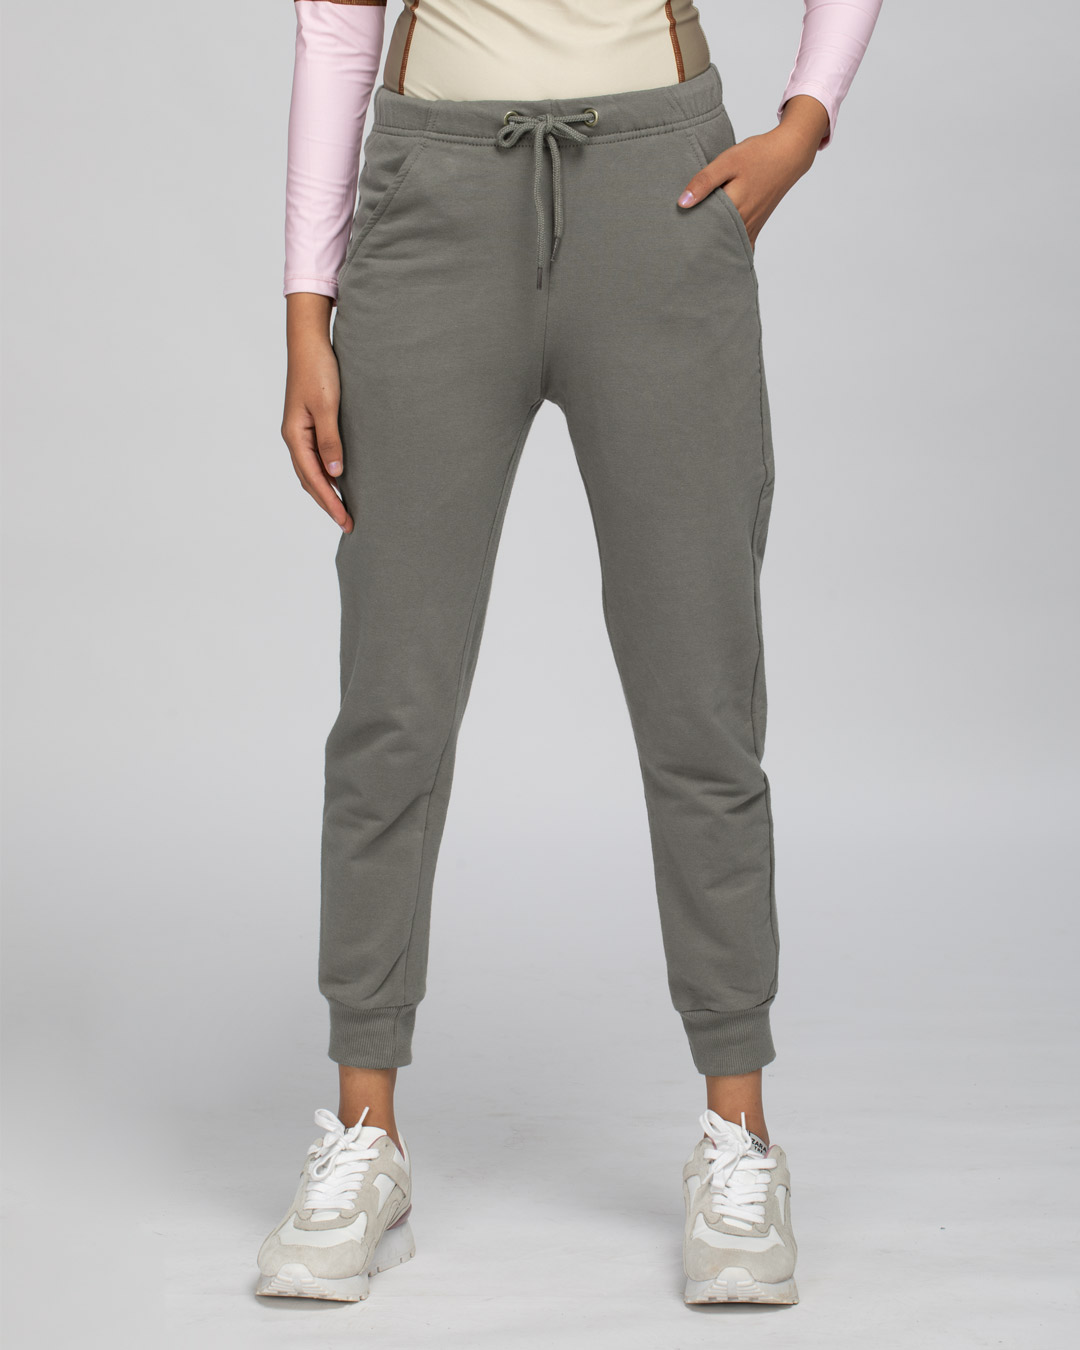 Buy Moss Green Casual Jogger Pants for Women grey Online at Bewakoof